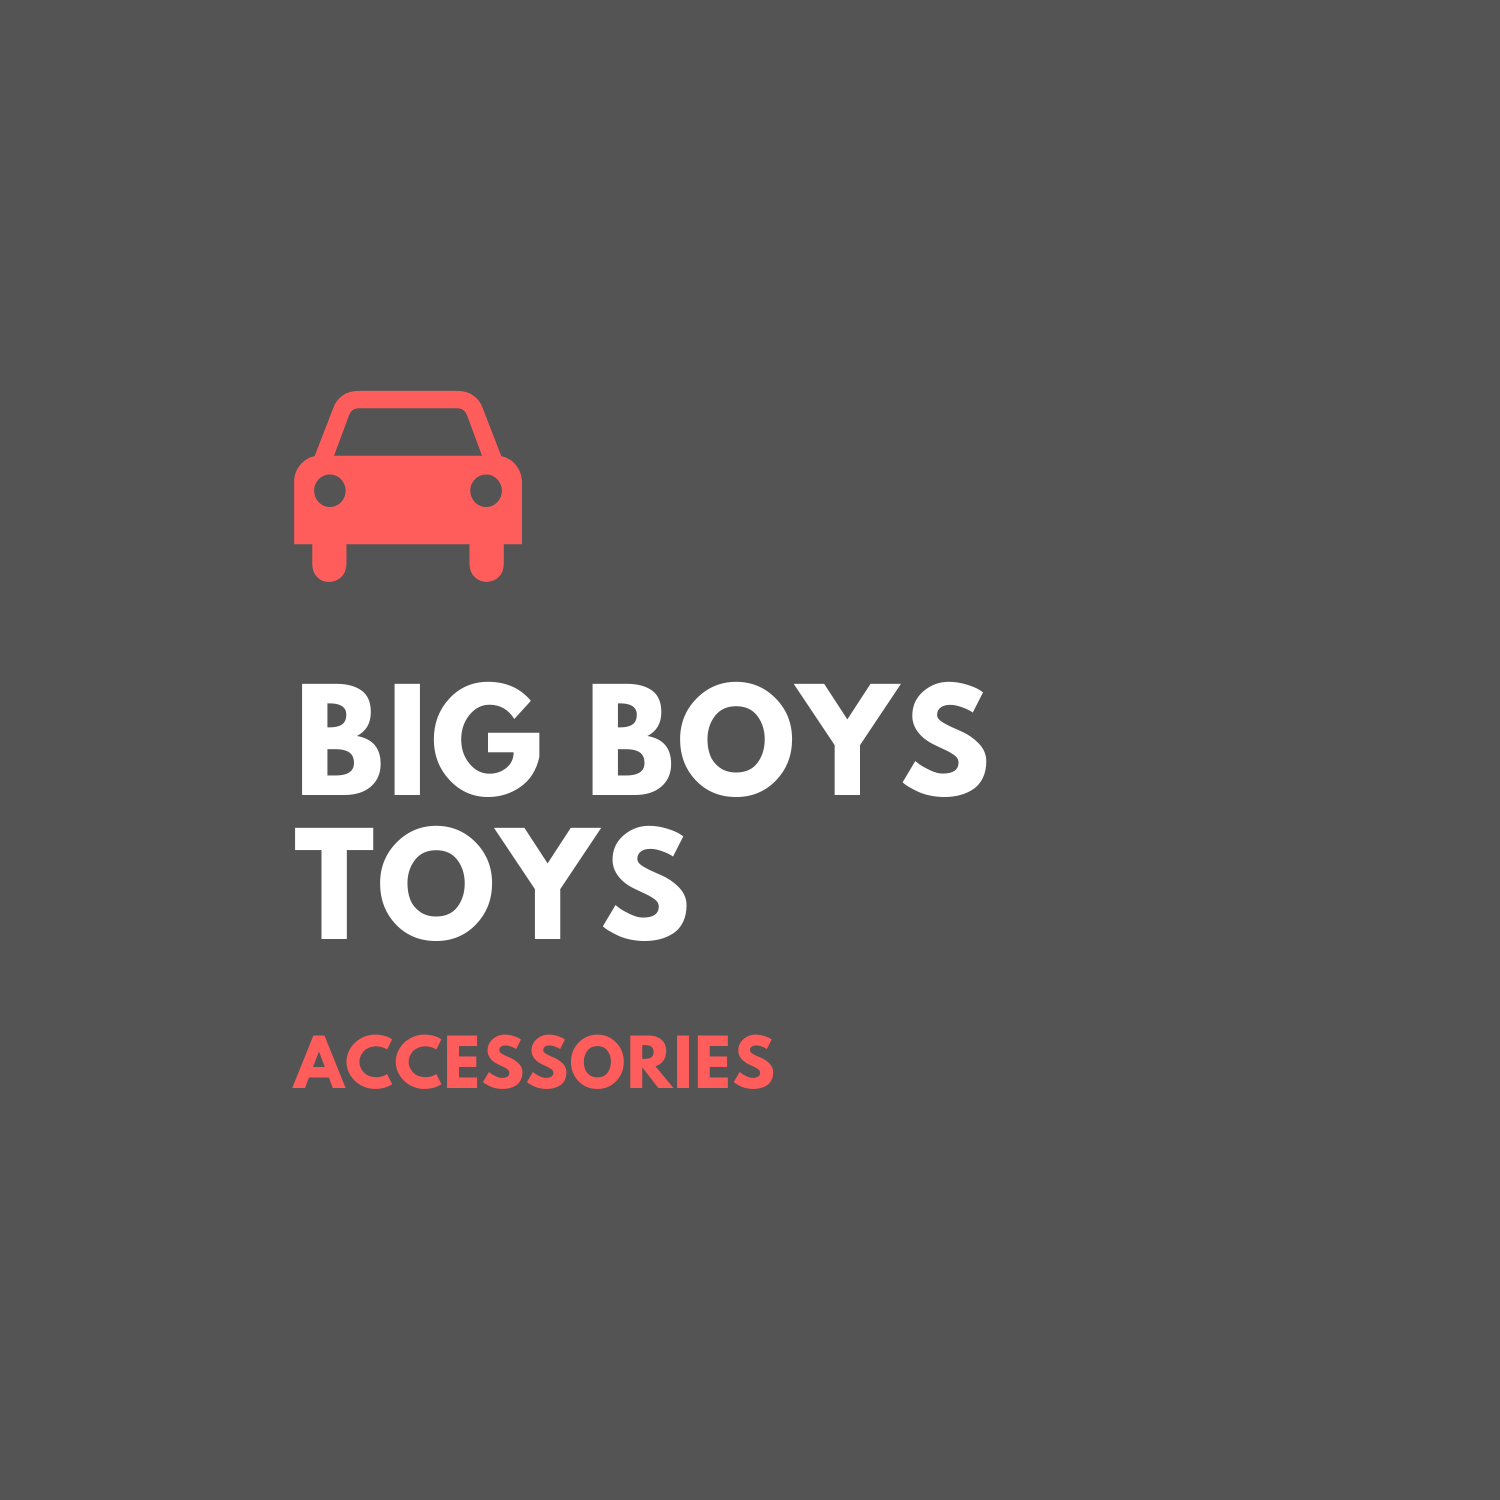 The big boys toys car accessories